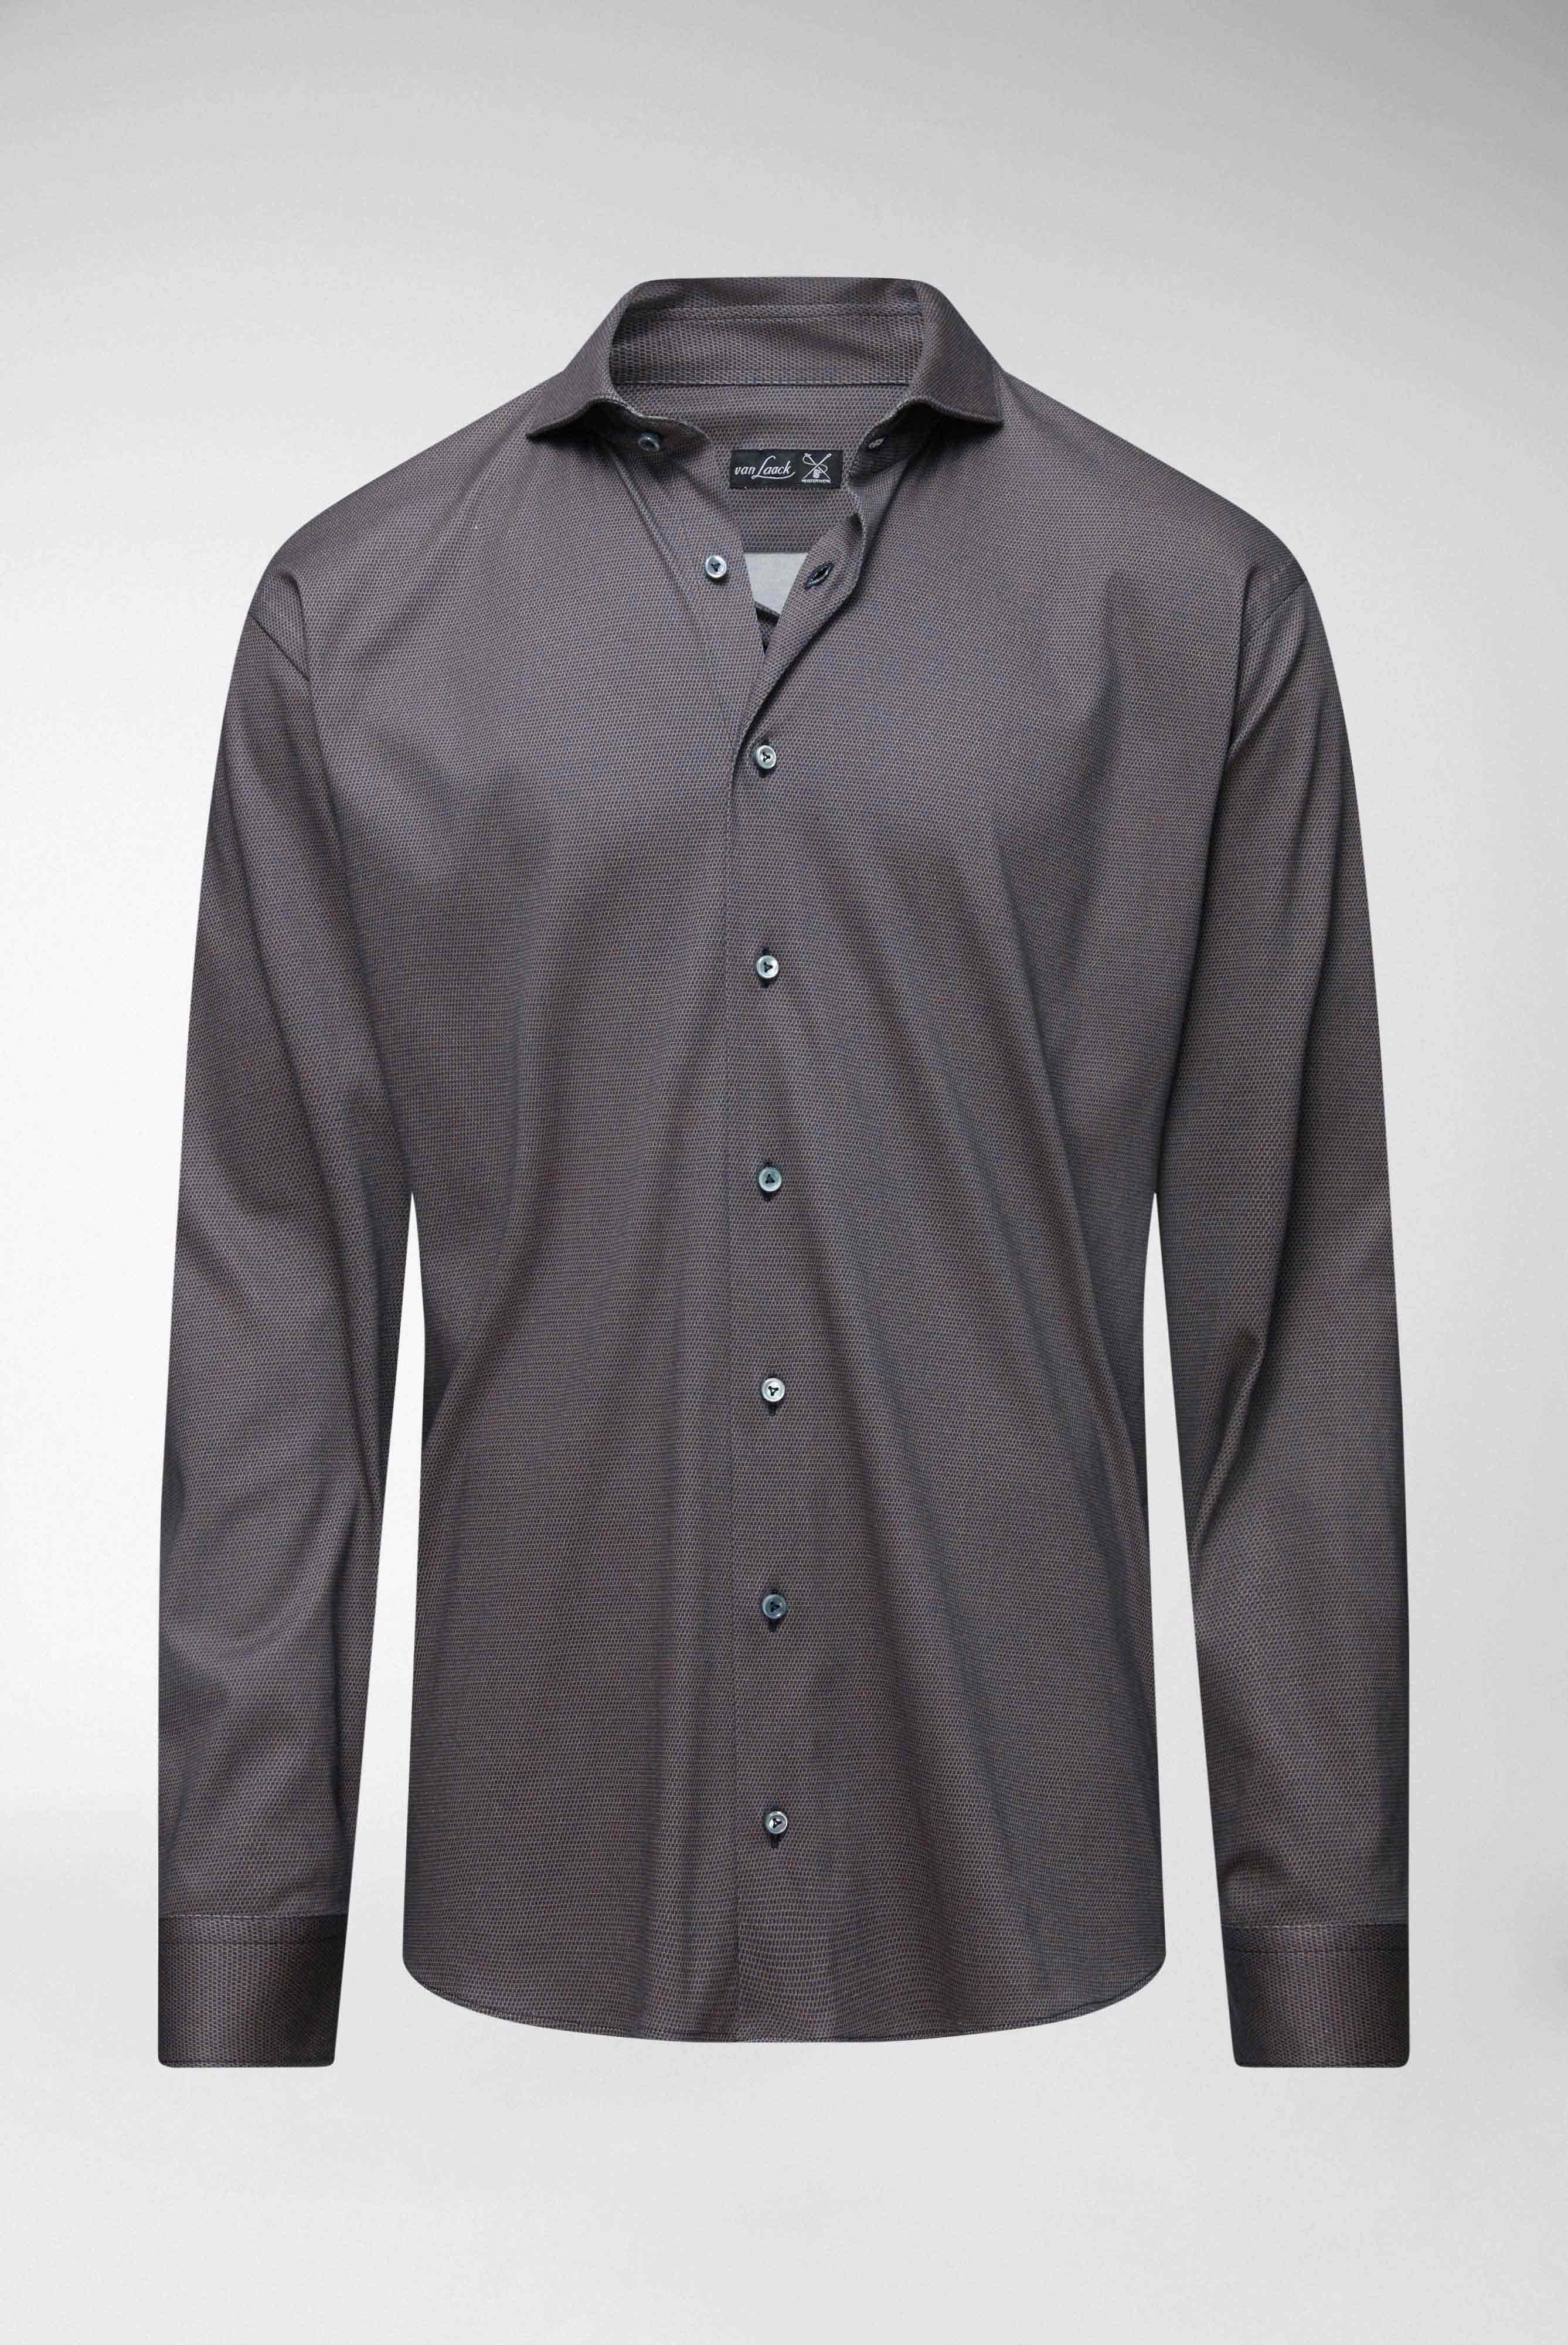 Casual Hemden+Jersey Hemd mit Mikro Druck Tailor Fit+20.1683.UC.187551.160.M